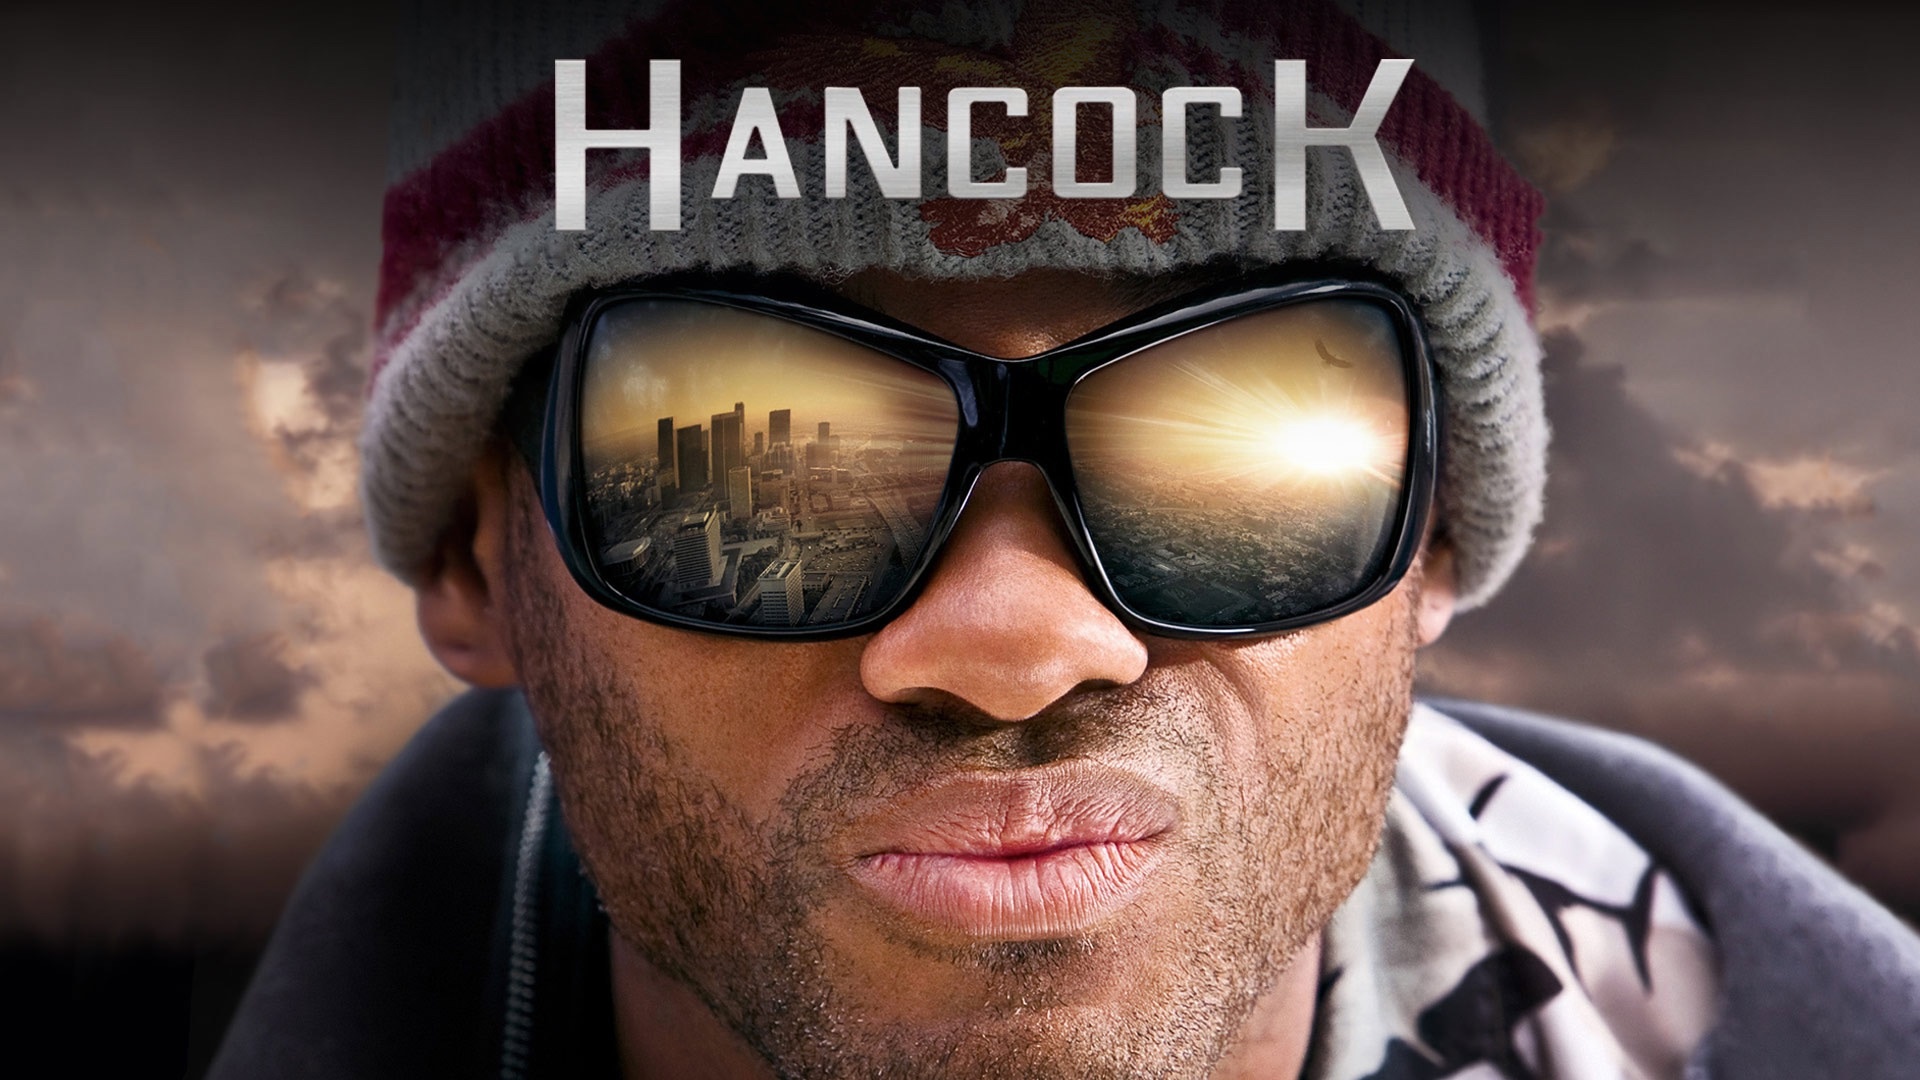 Hancock film, Extraordinary powers, Anti-hero protagonist, Action-packed adventure, 1920x1080 Full HD Desktop